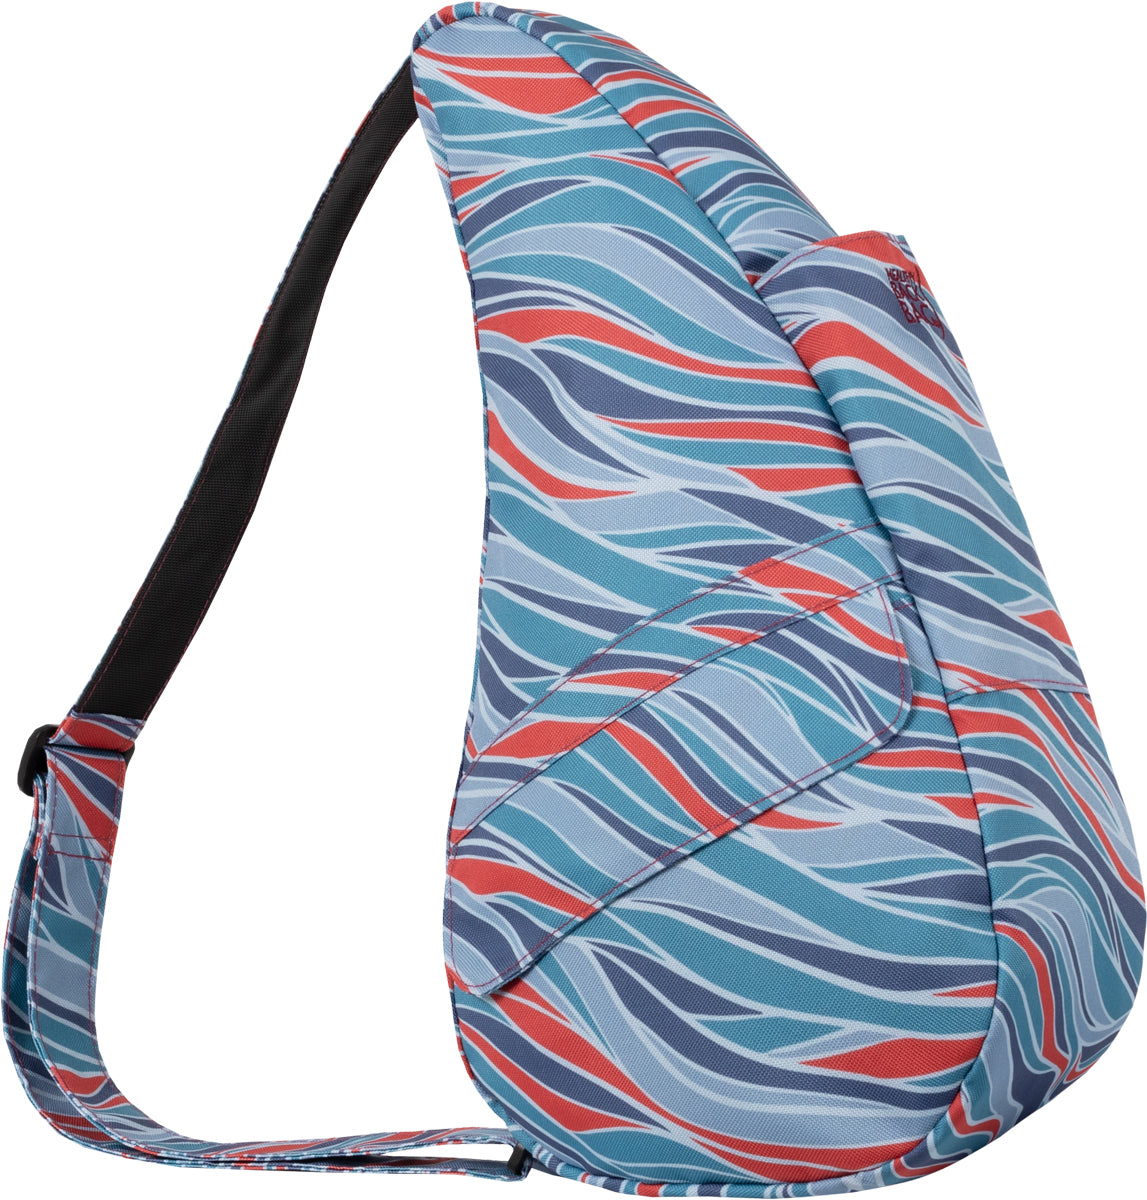 AmeriBag Small Healthy Back Bag Tote Prints and Patterns (Freeflow 1)